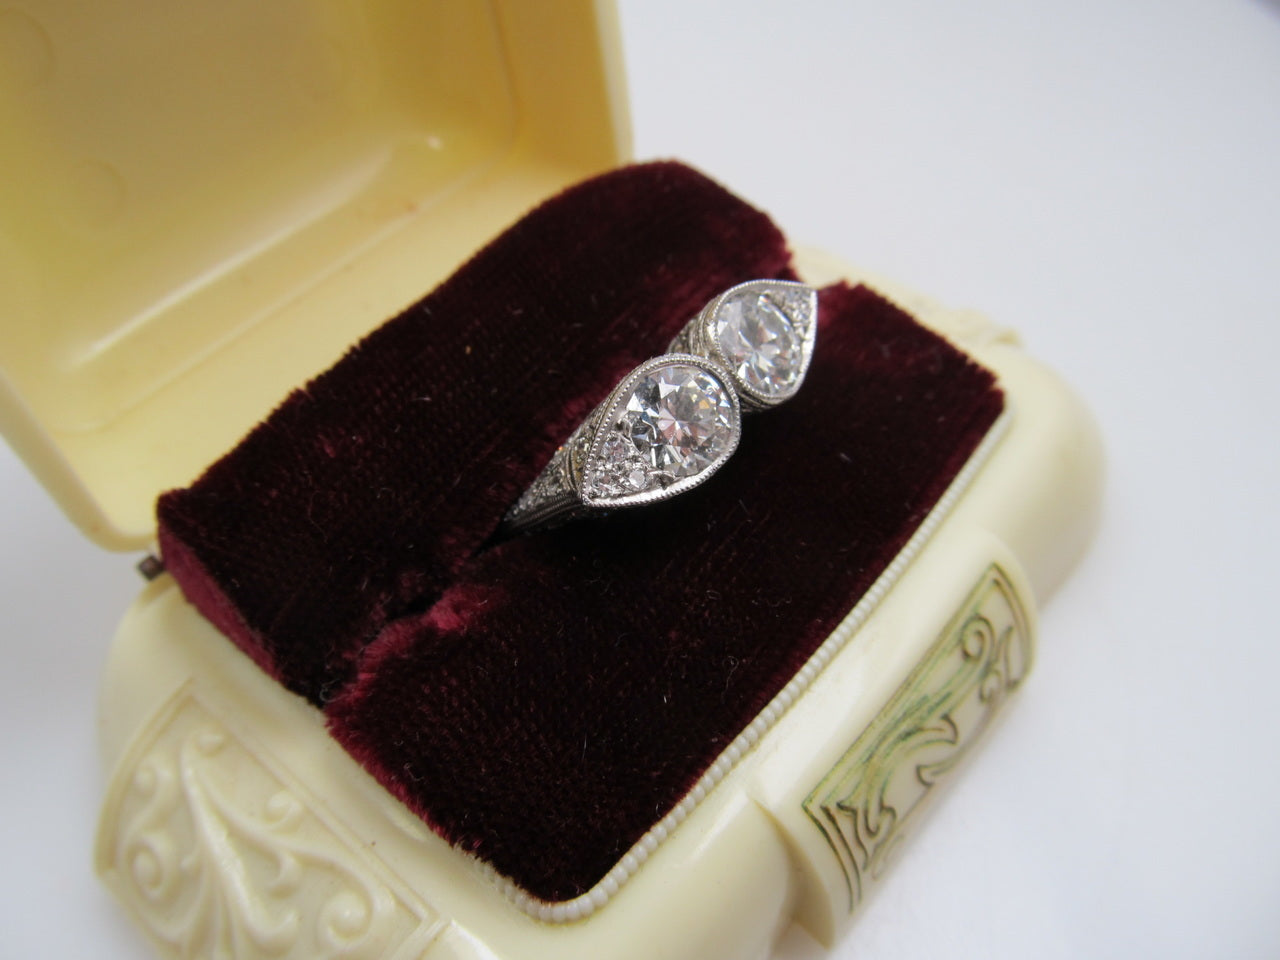 Antique Platinum Ring With A 1.02ct Diamond And A .91ct Diamond, Vs1 I. Circa 1920.